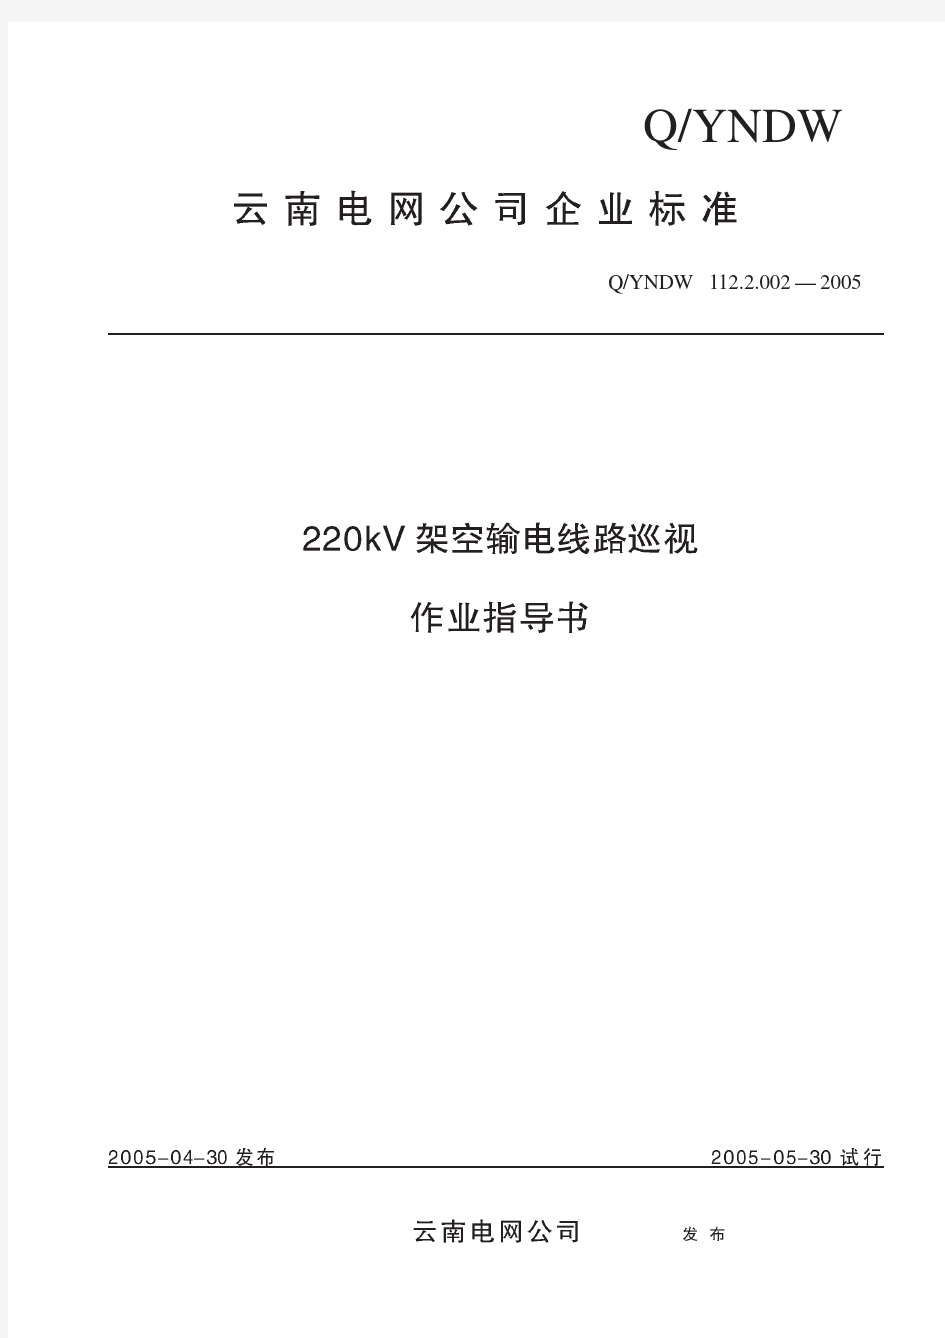 220kV架空输电线路巡视作业指导书